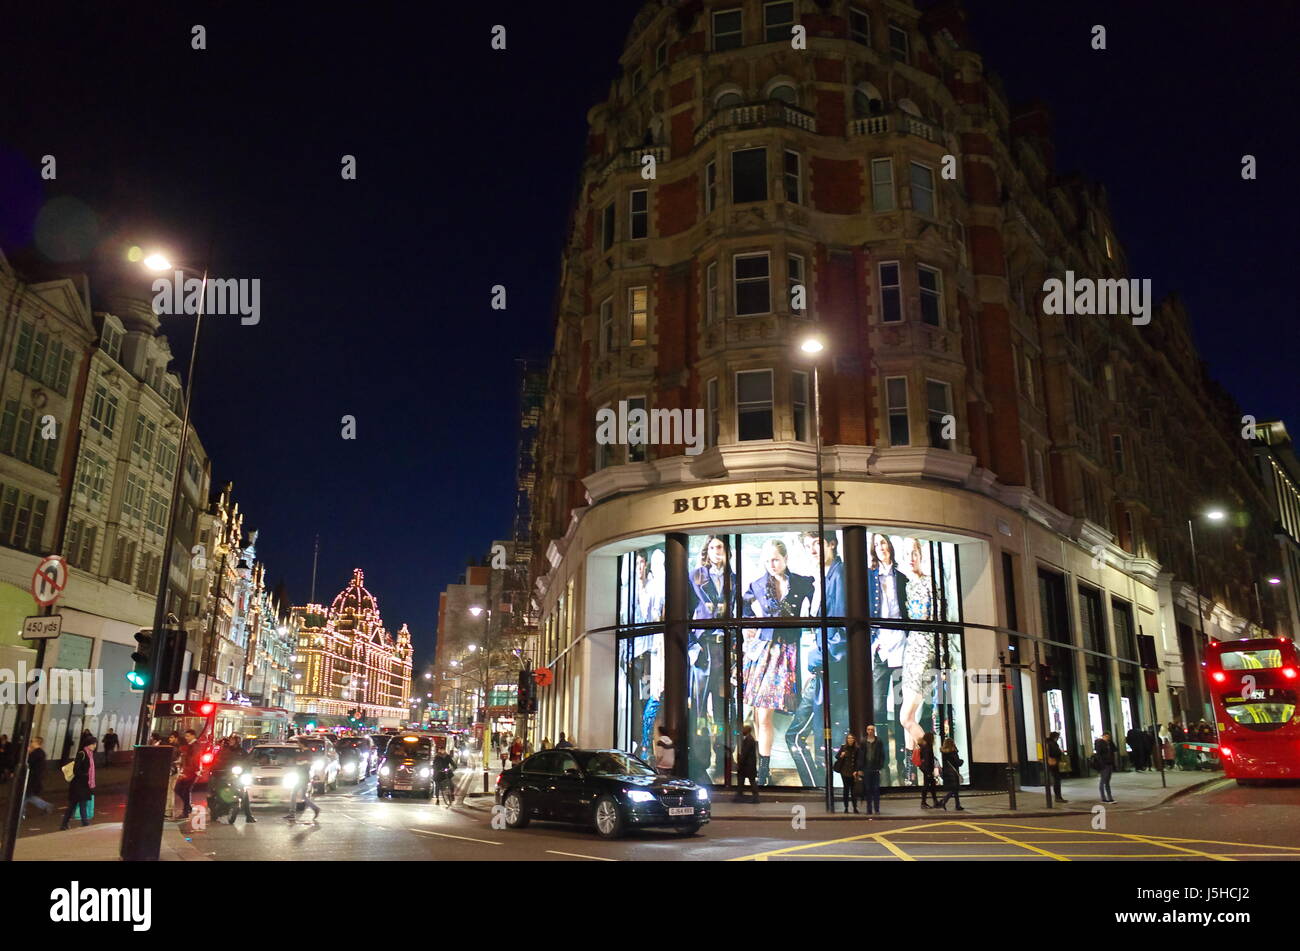 Burberry-Store in Nightsbridge, London, UK Stockfoto